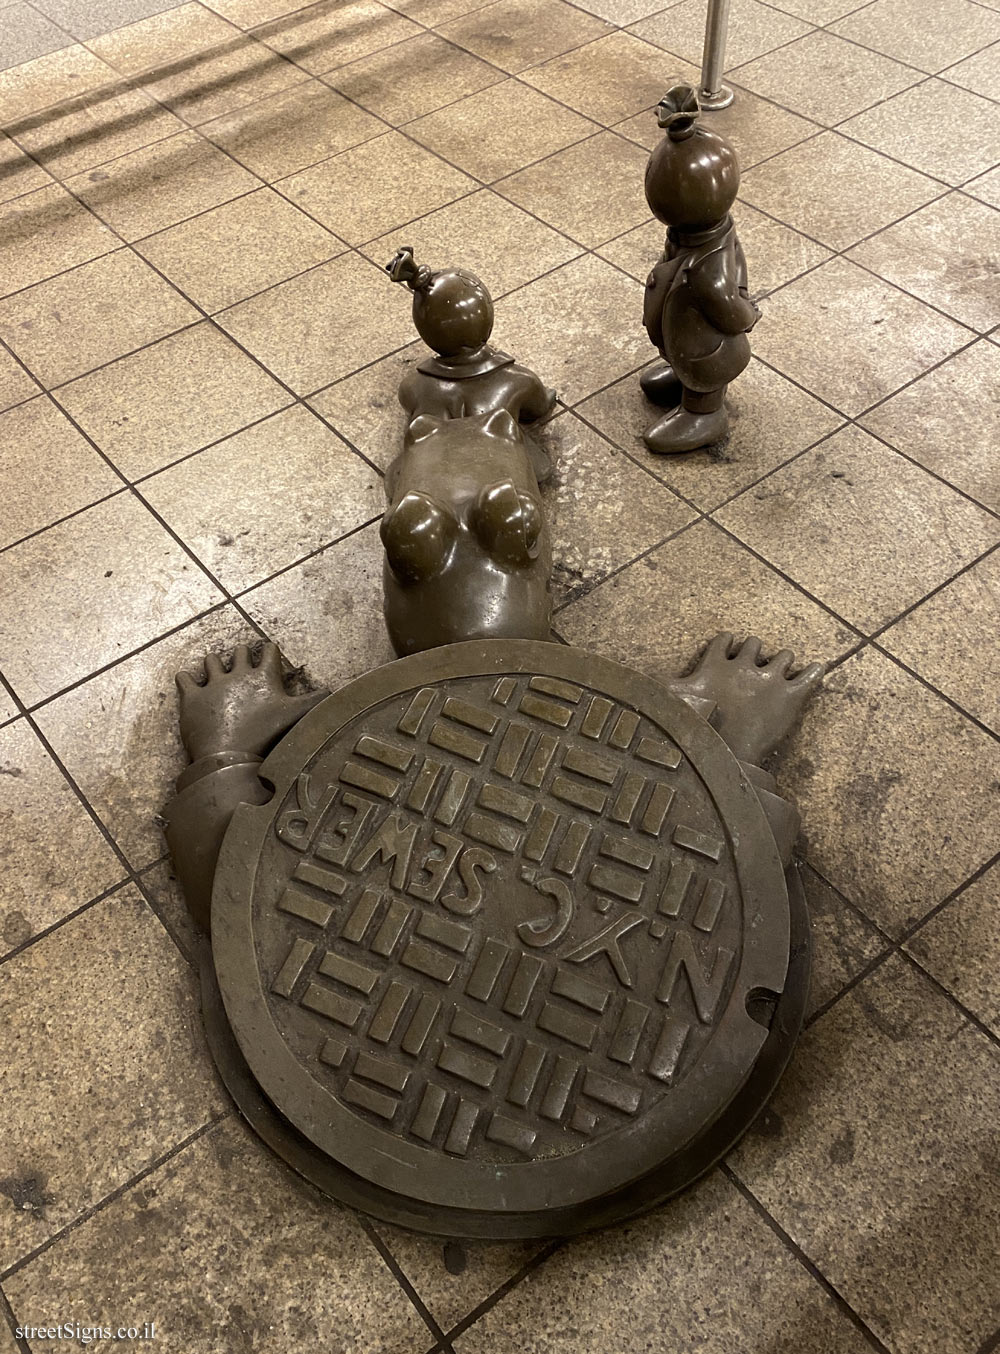 New York - Life Underground - Outdoor sculpture by Tom Otterness - 14 St / 8 Av, 300 W 14th St, New York, NY 10014, USA